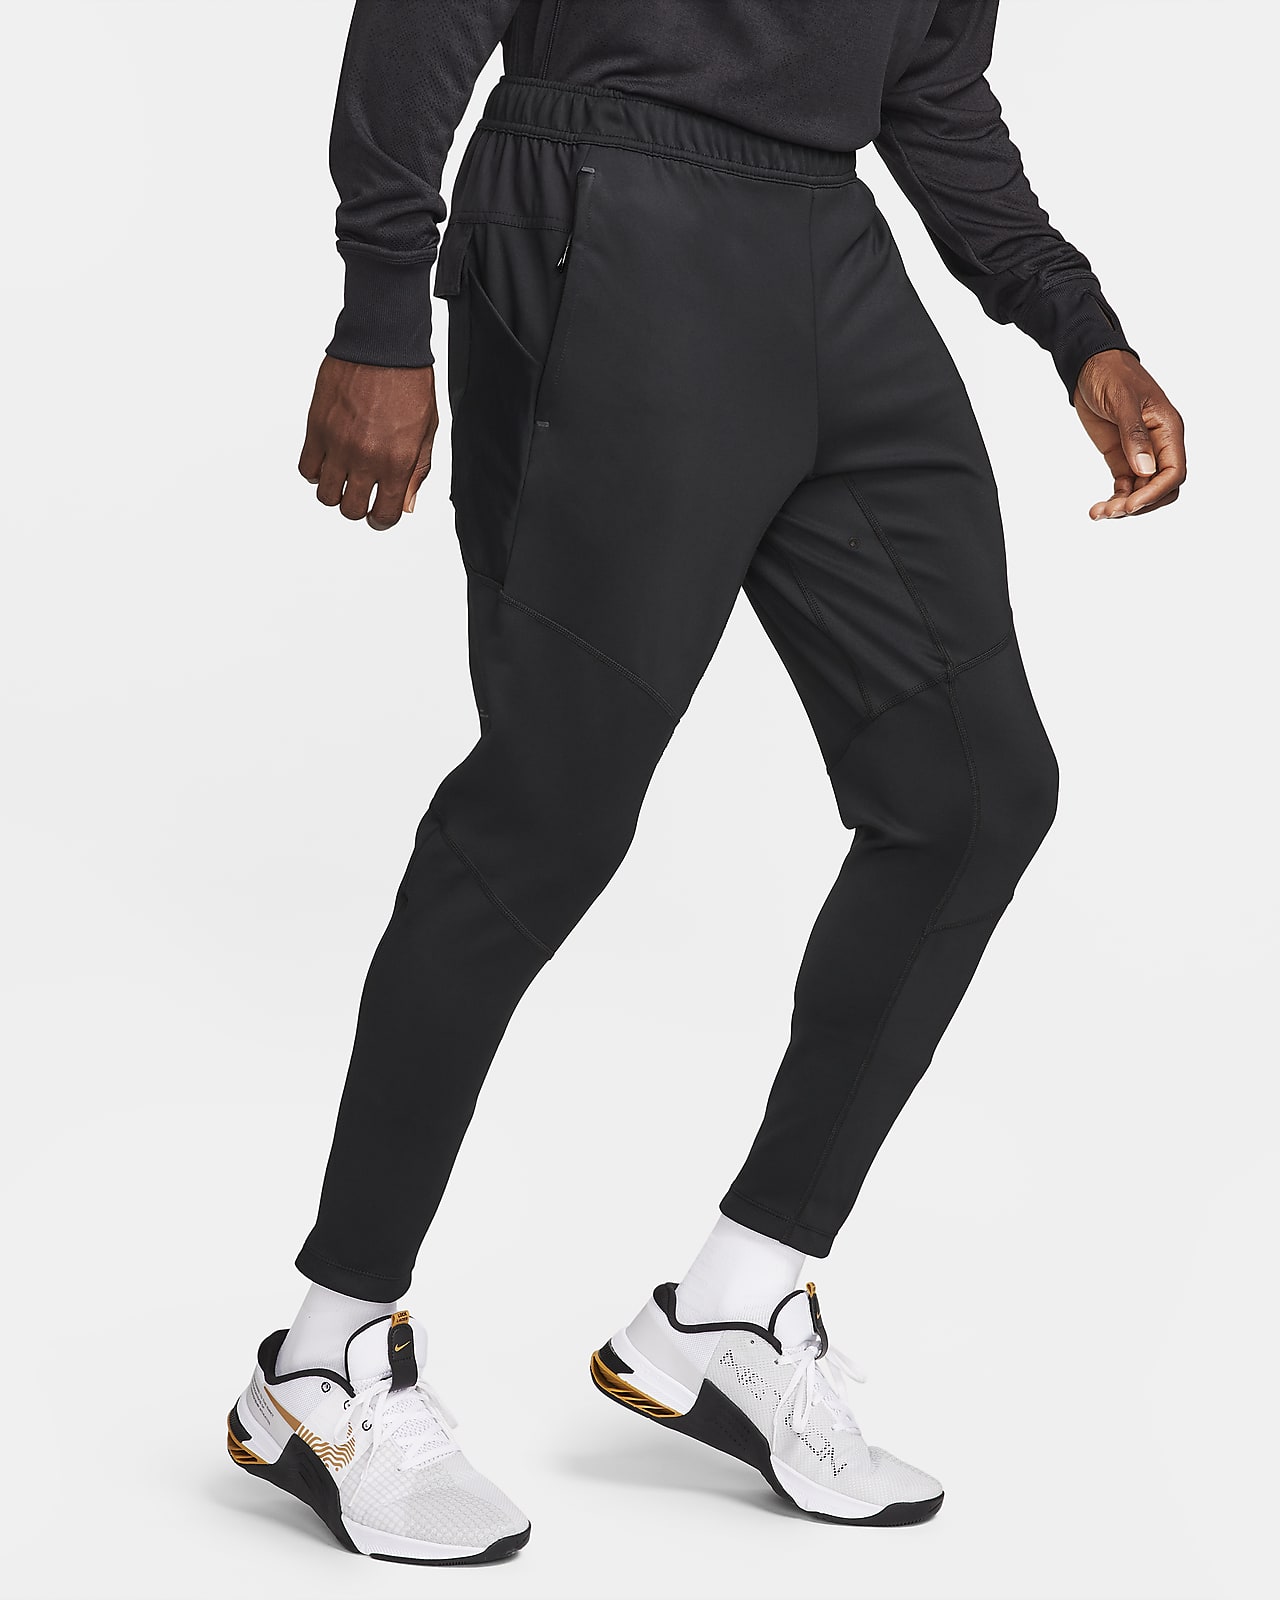 Nike Dri Fit Grey Track Pants - Buy Nike Dri Fit Grey Track Pants online in  India